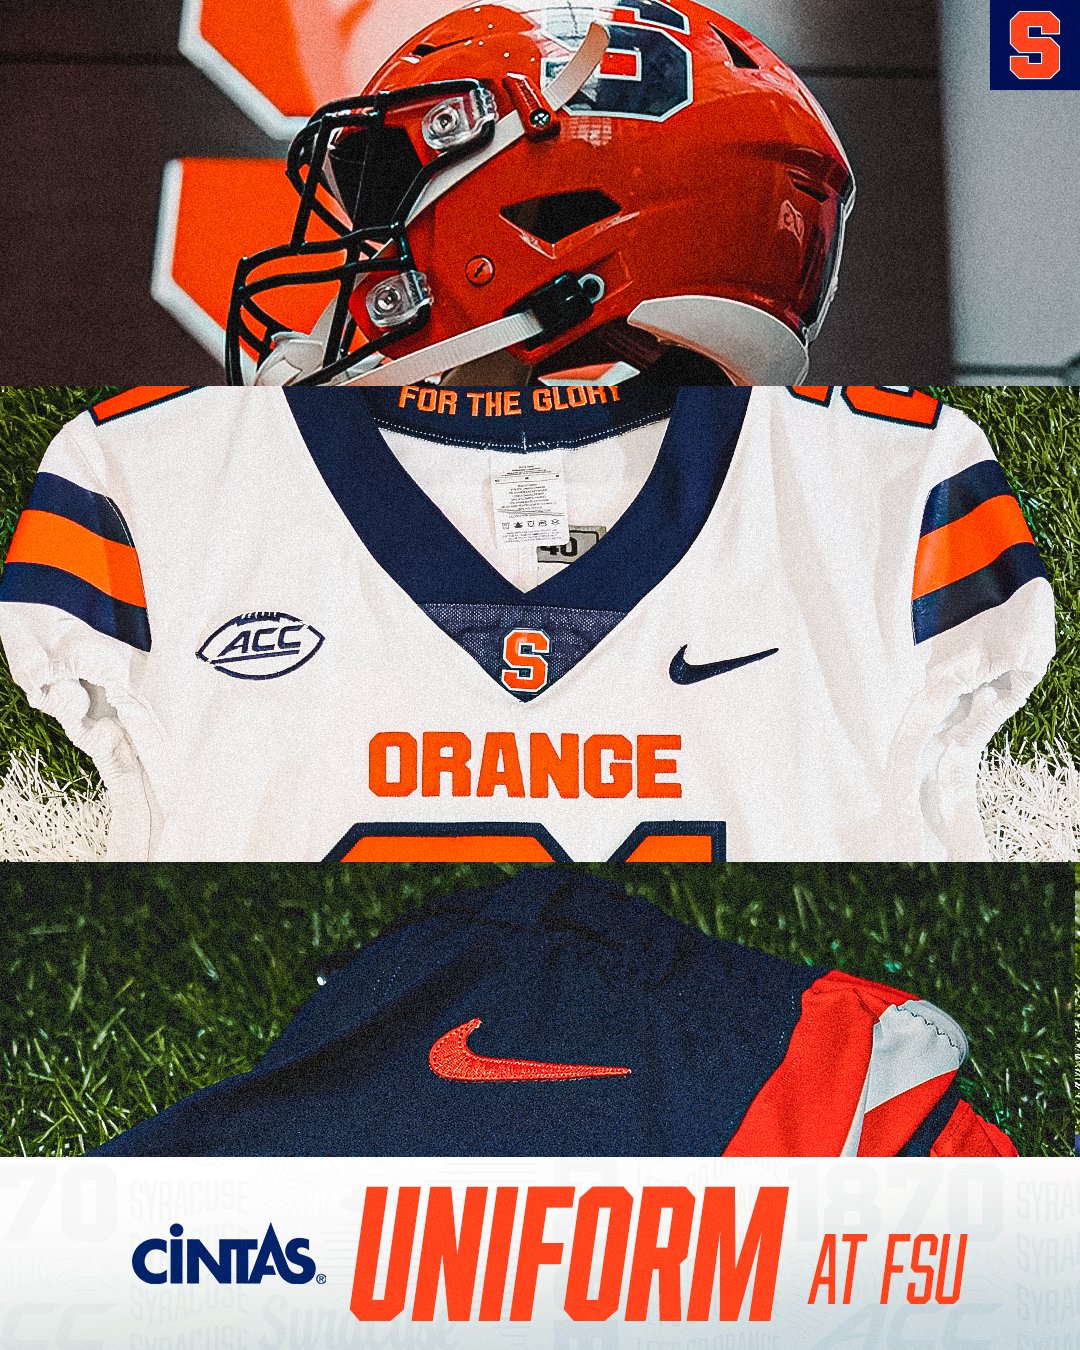 Syracuse football: Orange wearing all-white uniforms vs. Ohio